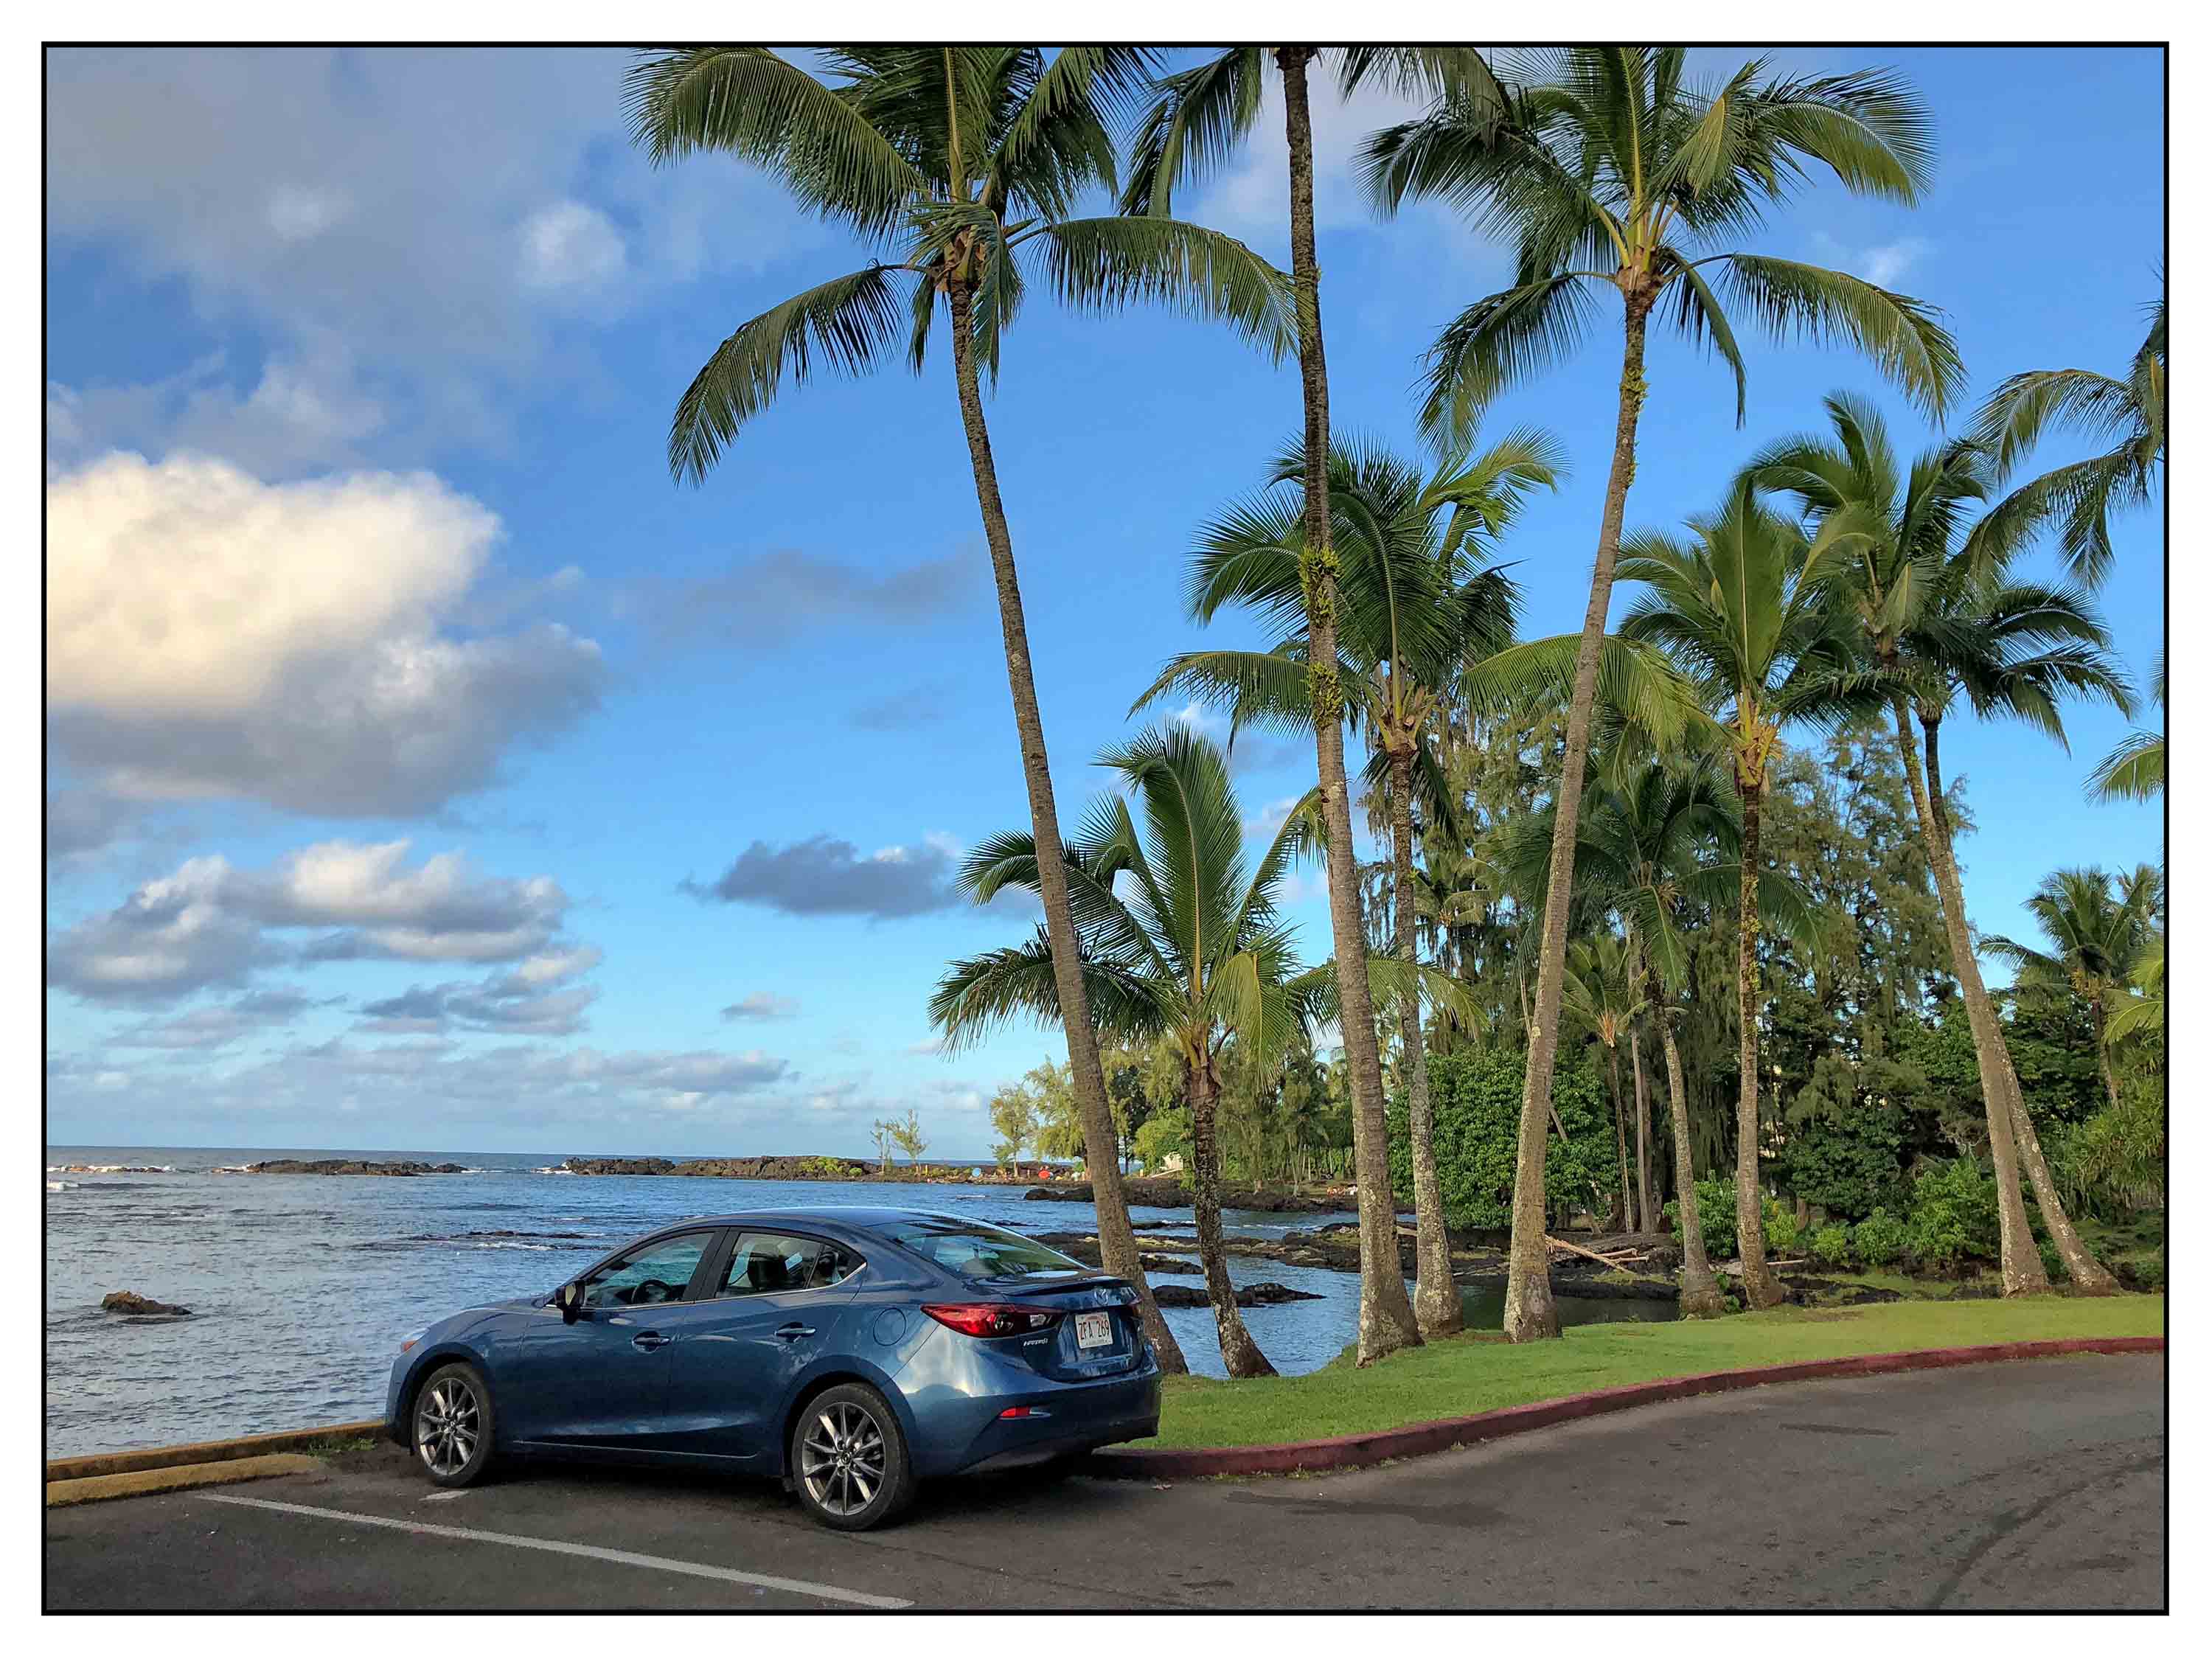 driving tour of kona hawaii